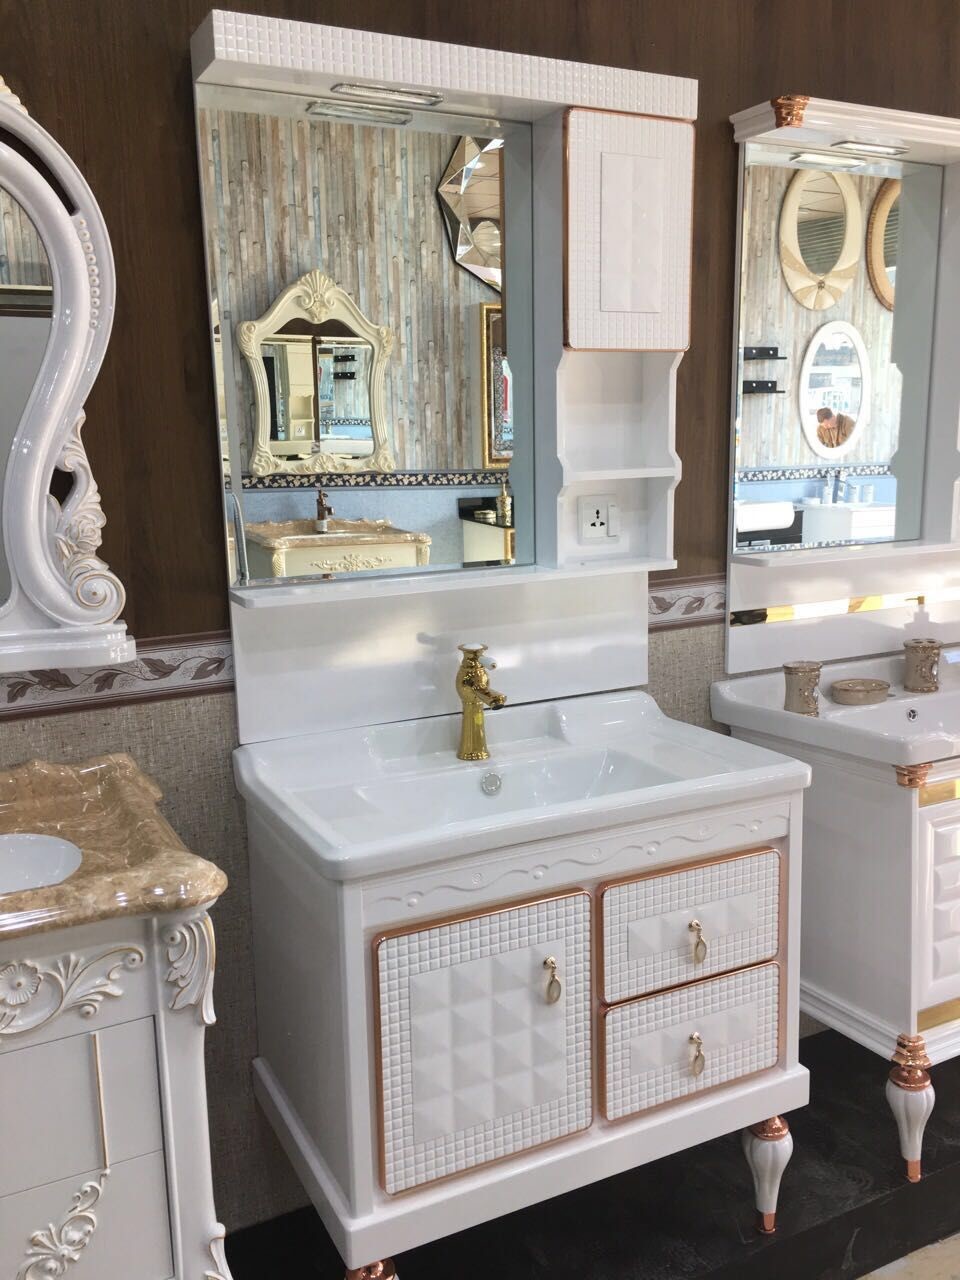 Buy Antique Pvc Vanity Cabinets Soft Close Door Contemporary Bathroom Vanity Sets at wholesale prices